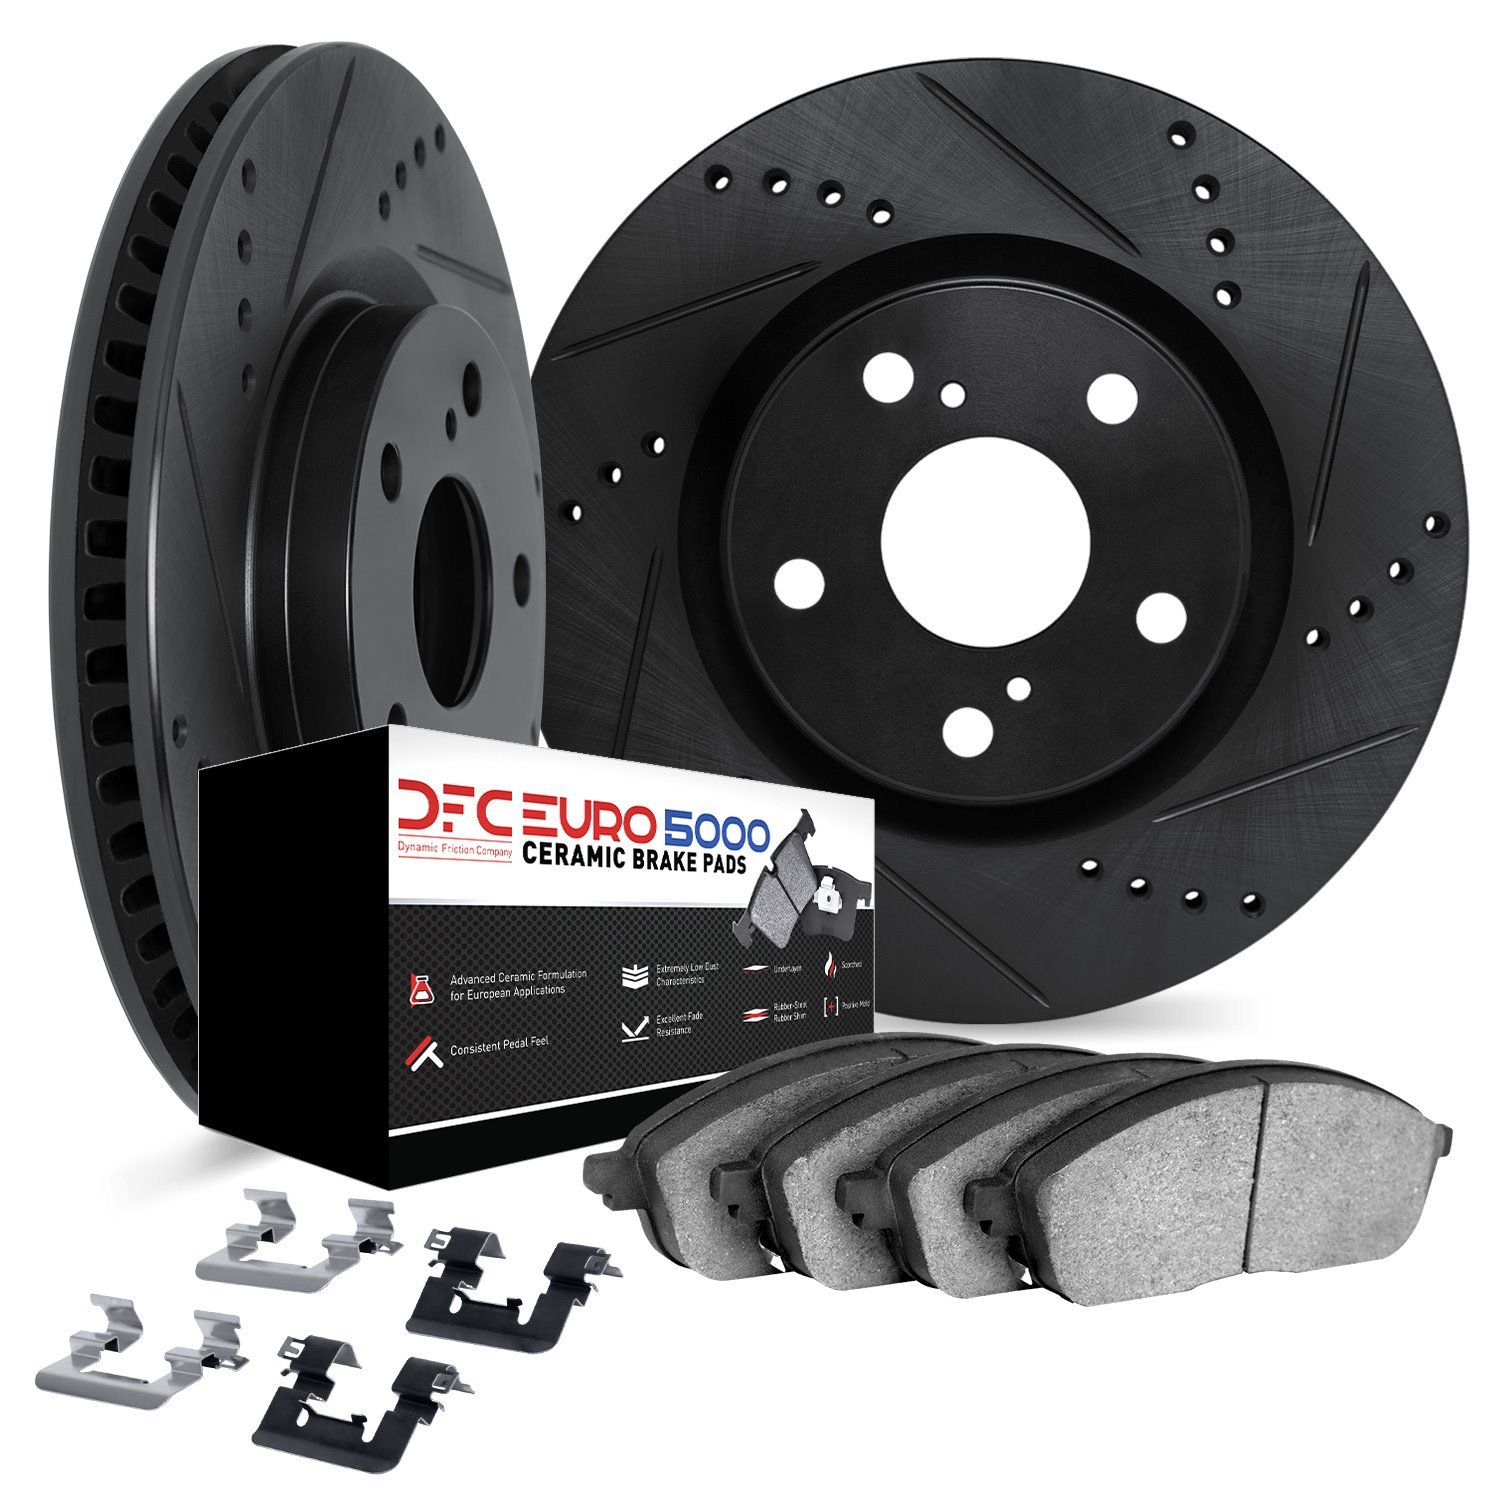 8612-11031 Drilled/Slotted Brake Rotors w/5000 Euro Ceramic Brake Pads Kit & Hardware [Black], Fits Select Multiple Makes/Models